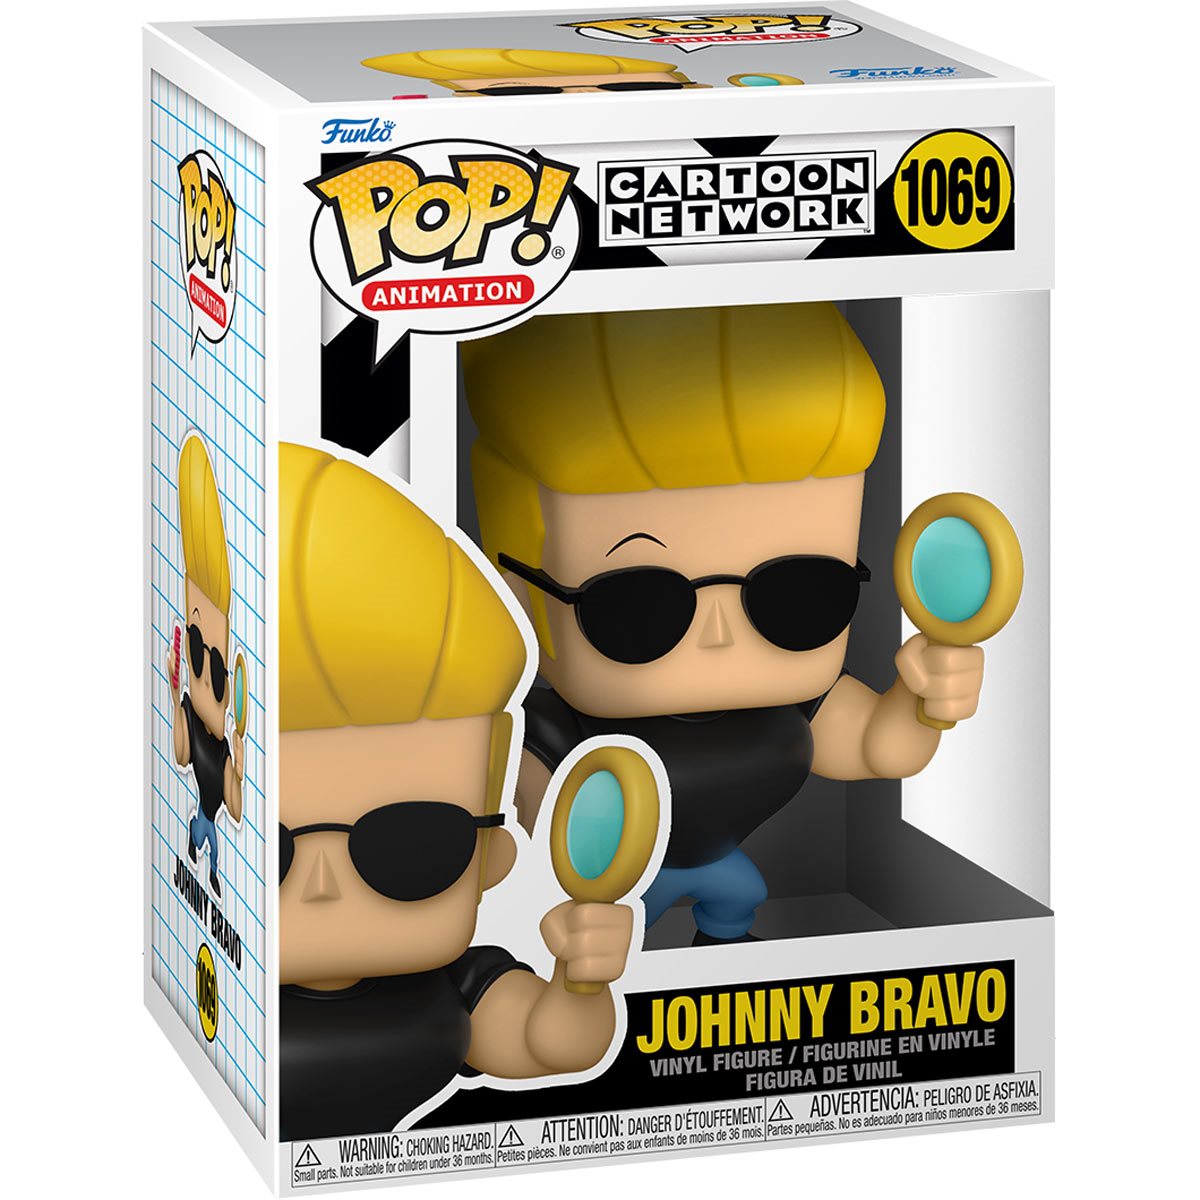 johnny bravo with mirror funko pop figure #1069 vinyl figure